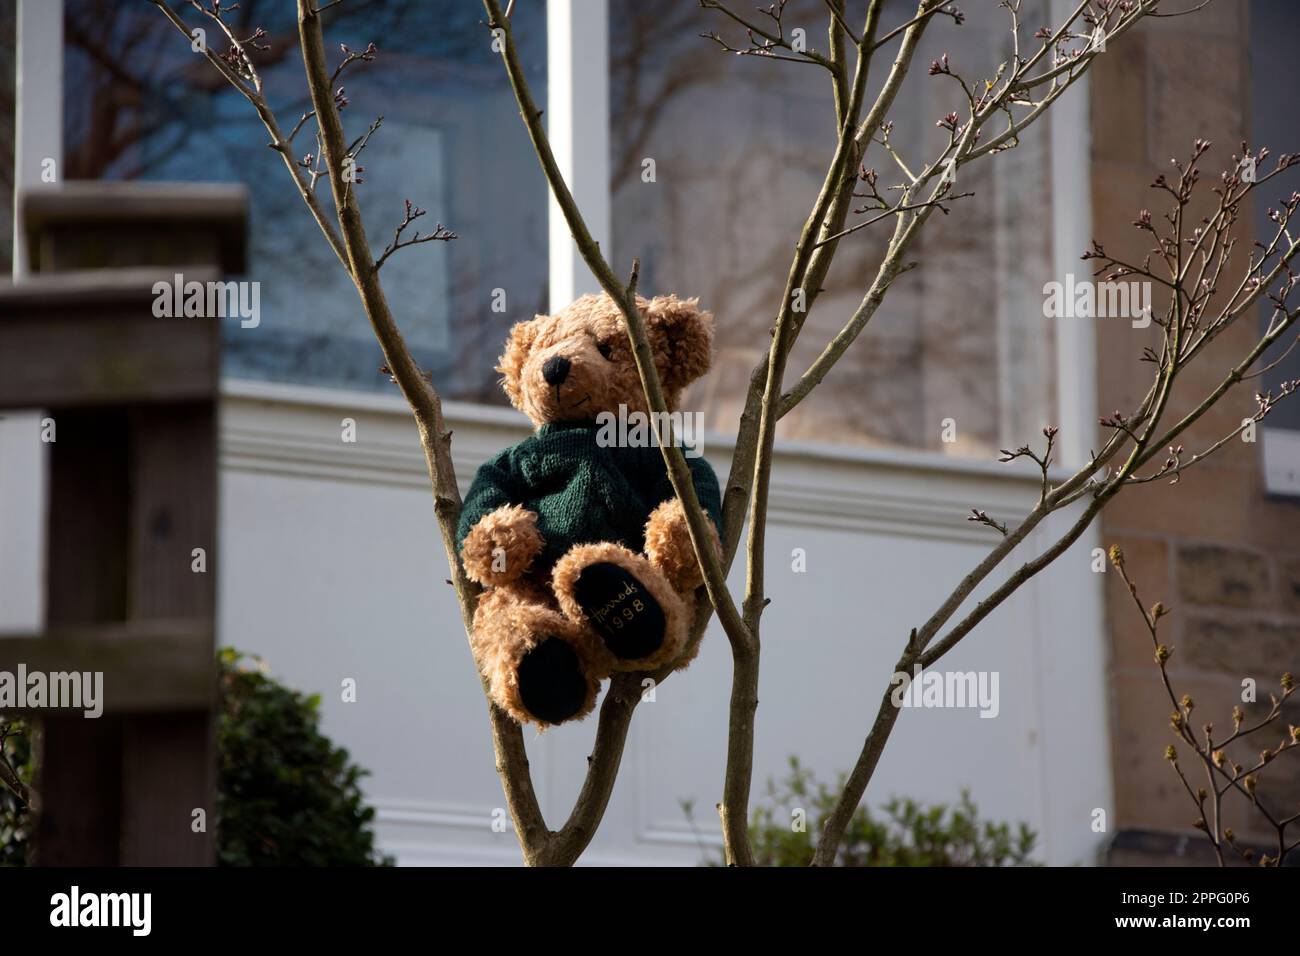 Teddybear in tree spreading hope in time of coronavirus, UK Stock Photo